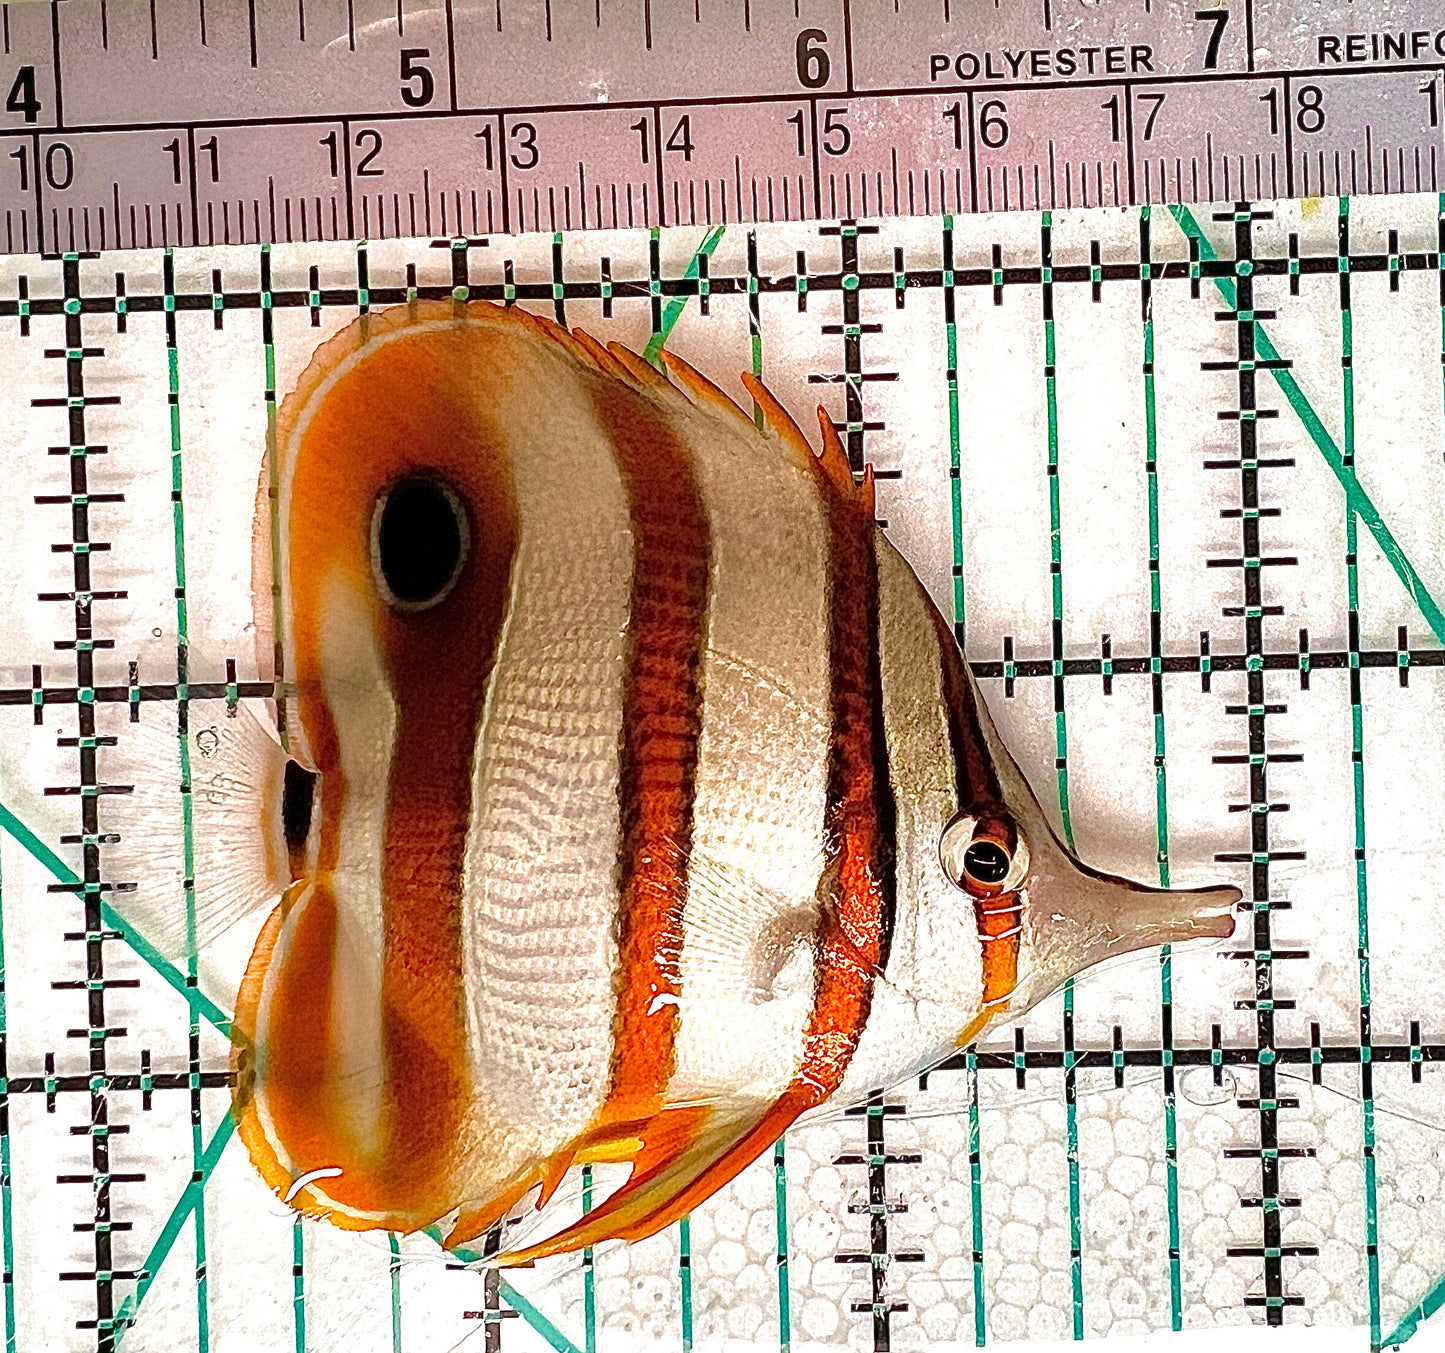 Copperband Butterflyfish CB050604 WYSIWYG Size: M 3" approx